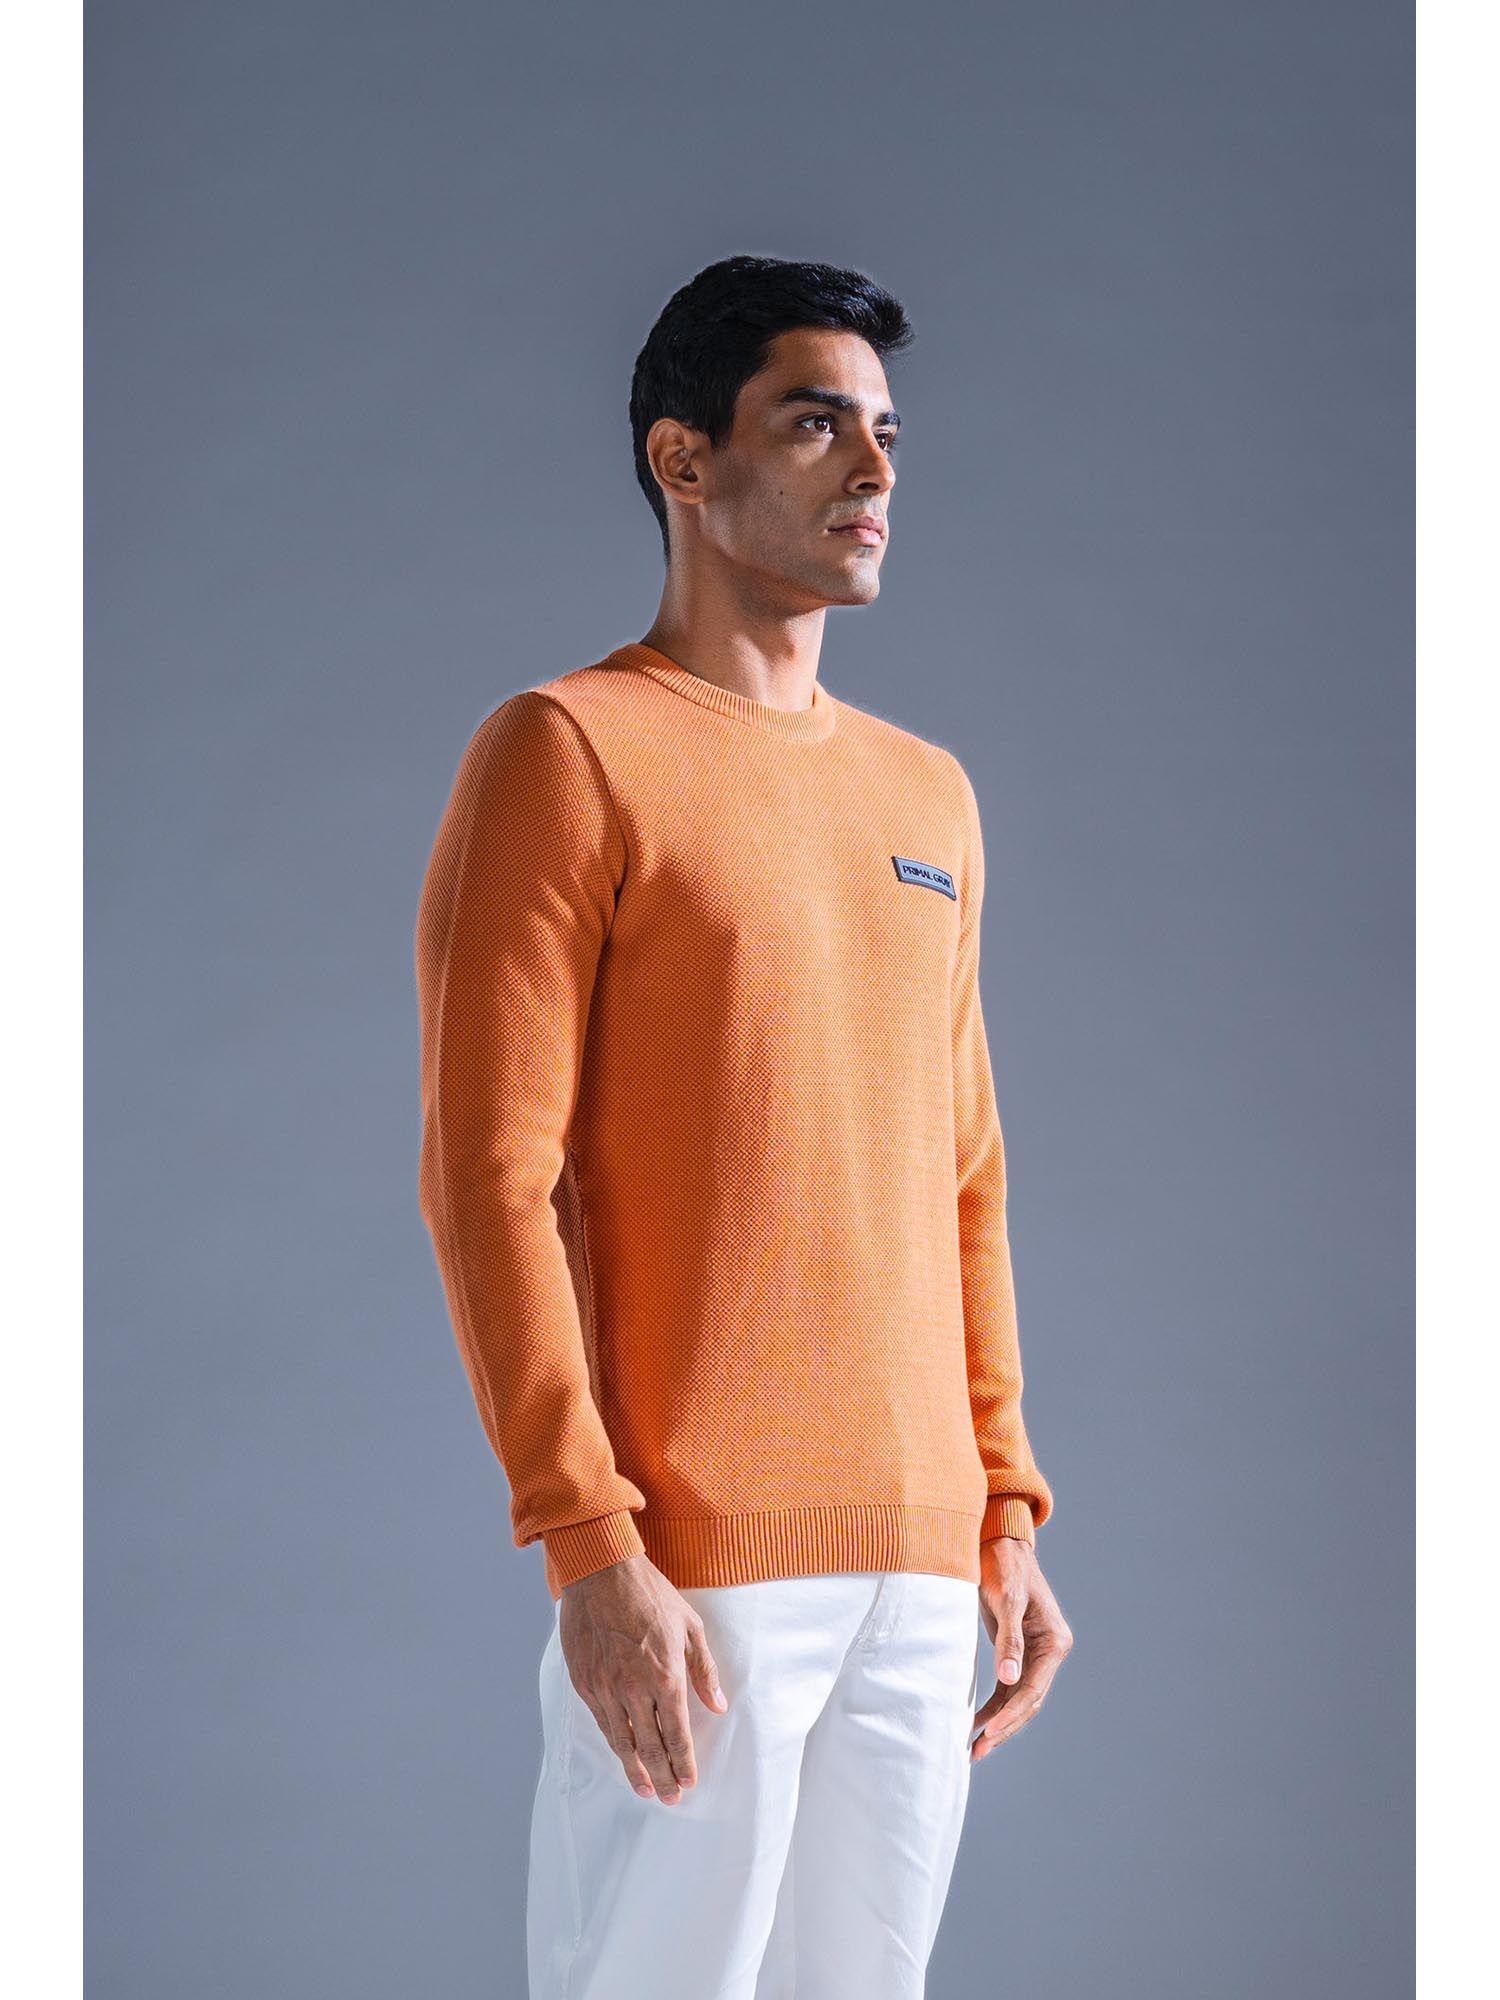 apricot cotton knit sweater classic sweater